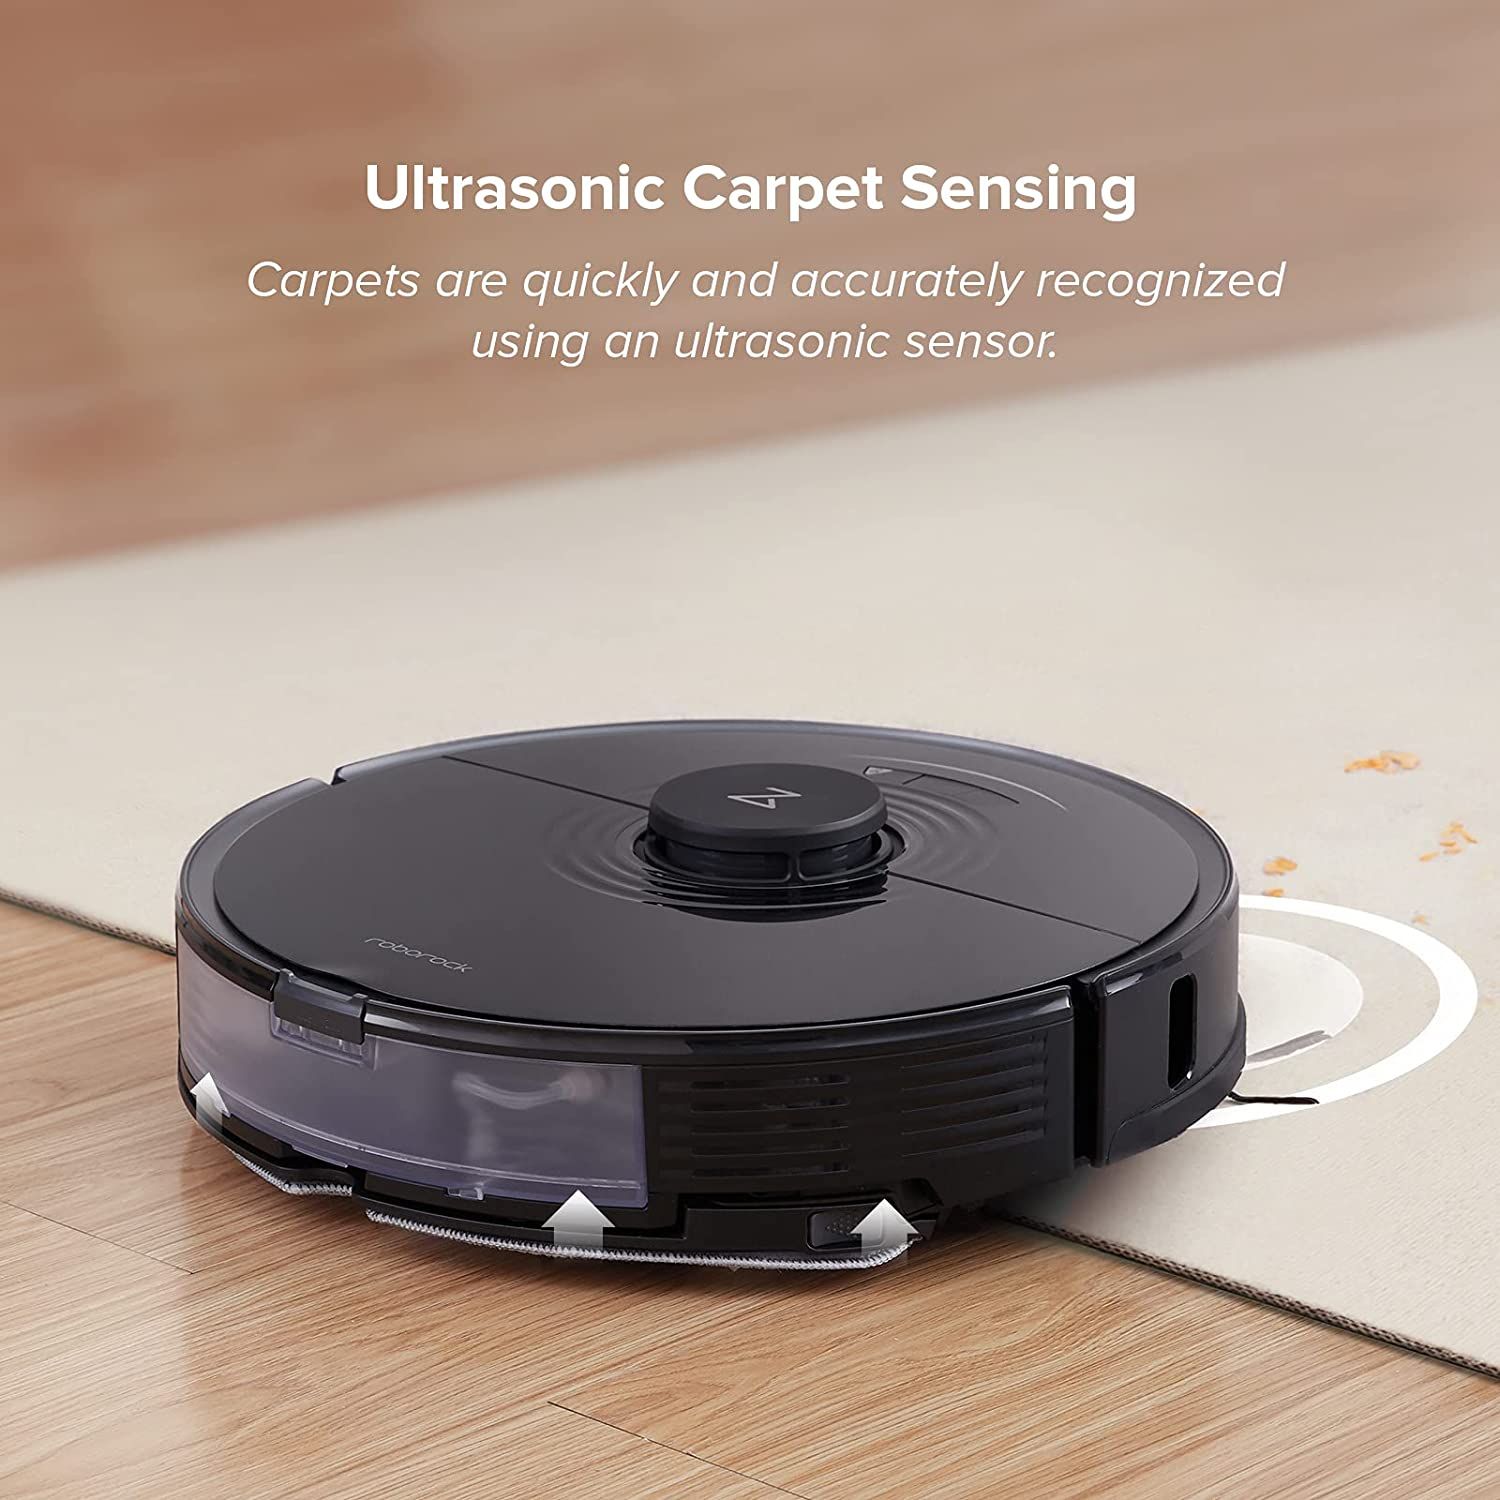 A robot vacuum transitioning to carpet